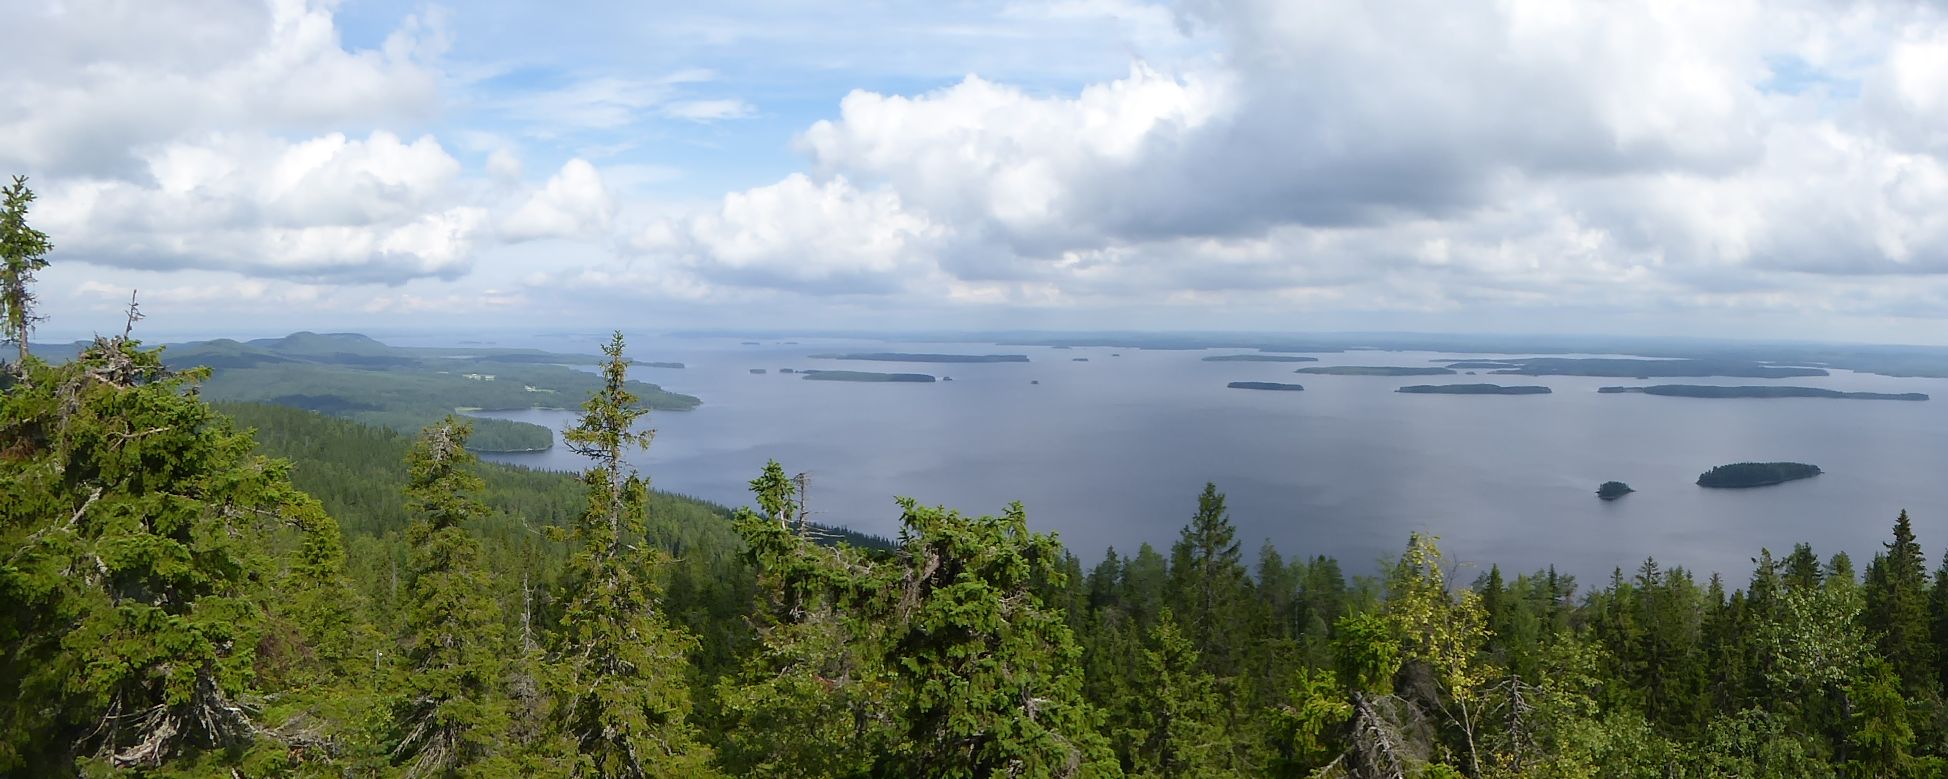 phantastischer Ausblick vom Berg Ukkokoli in Finnland